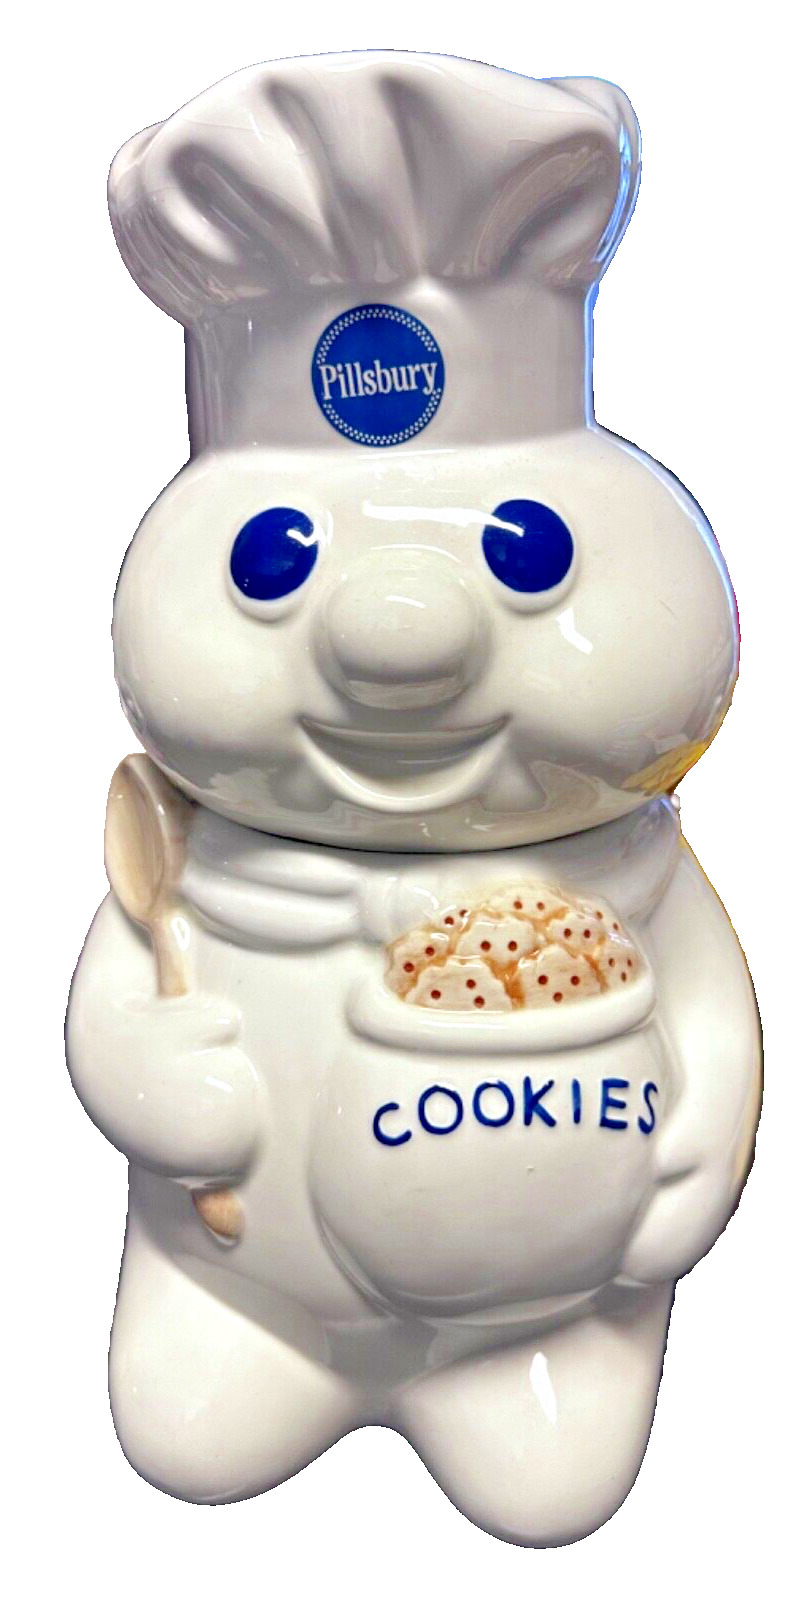 1998 pillsbury dough boy cookie jar that makes noise good condition